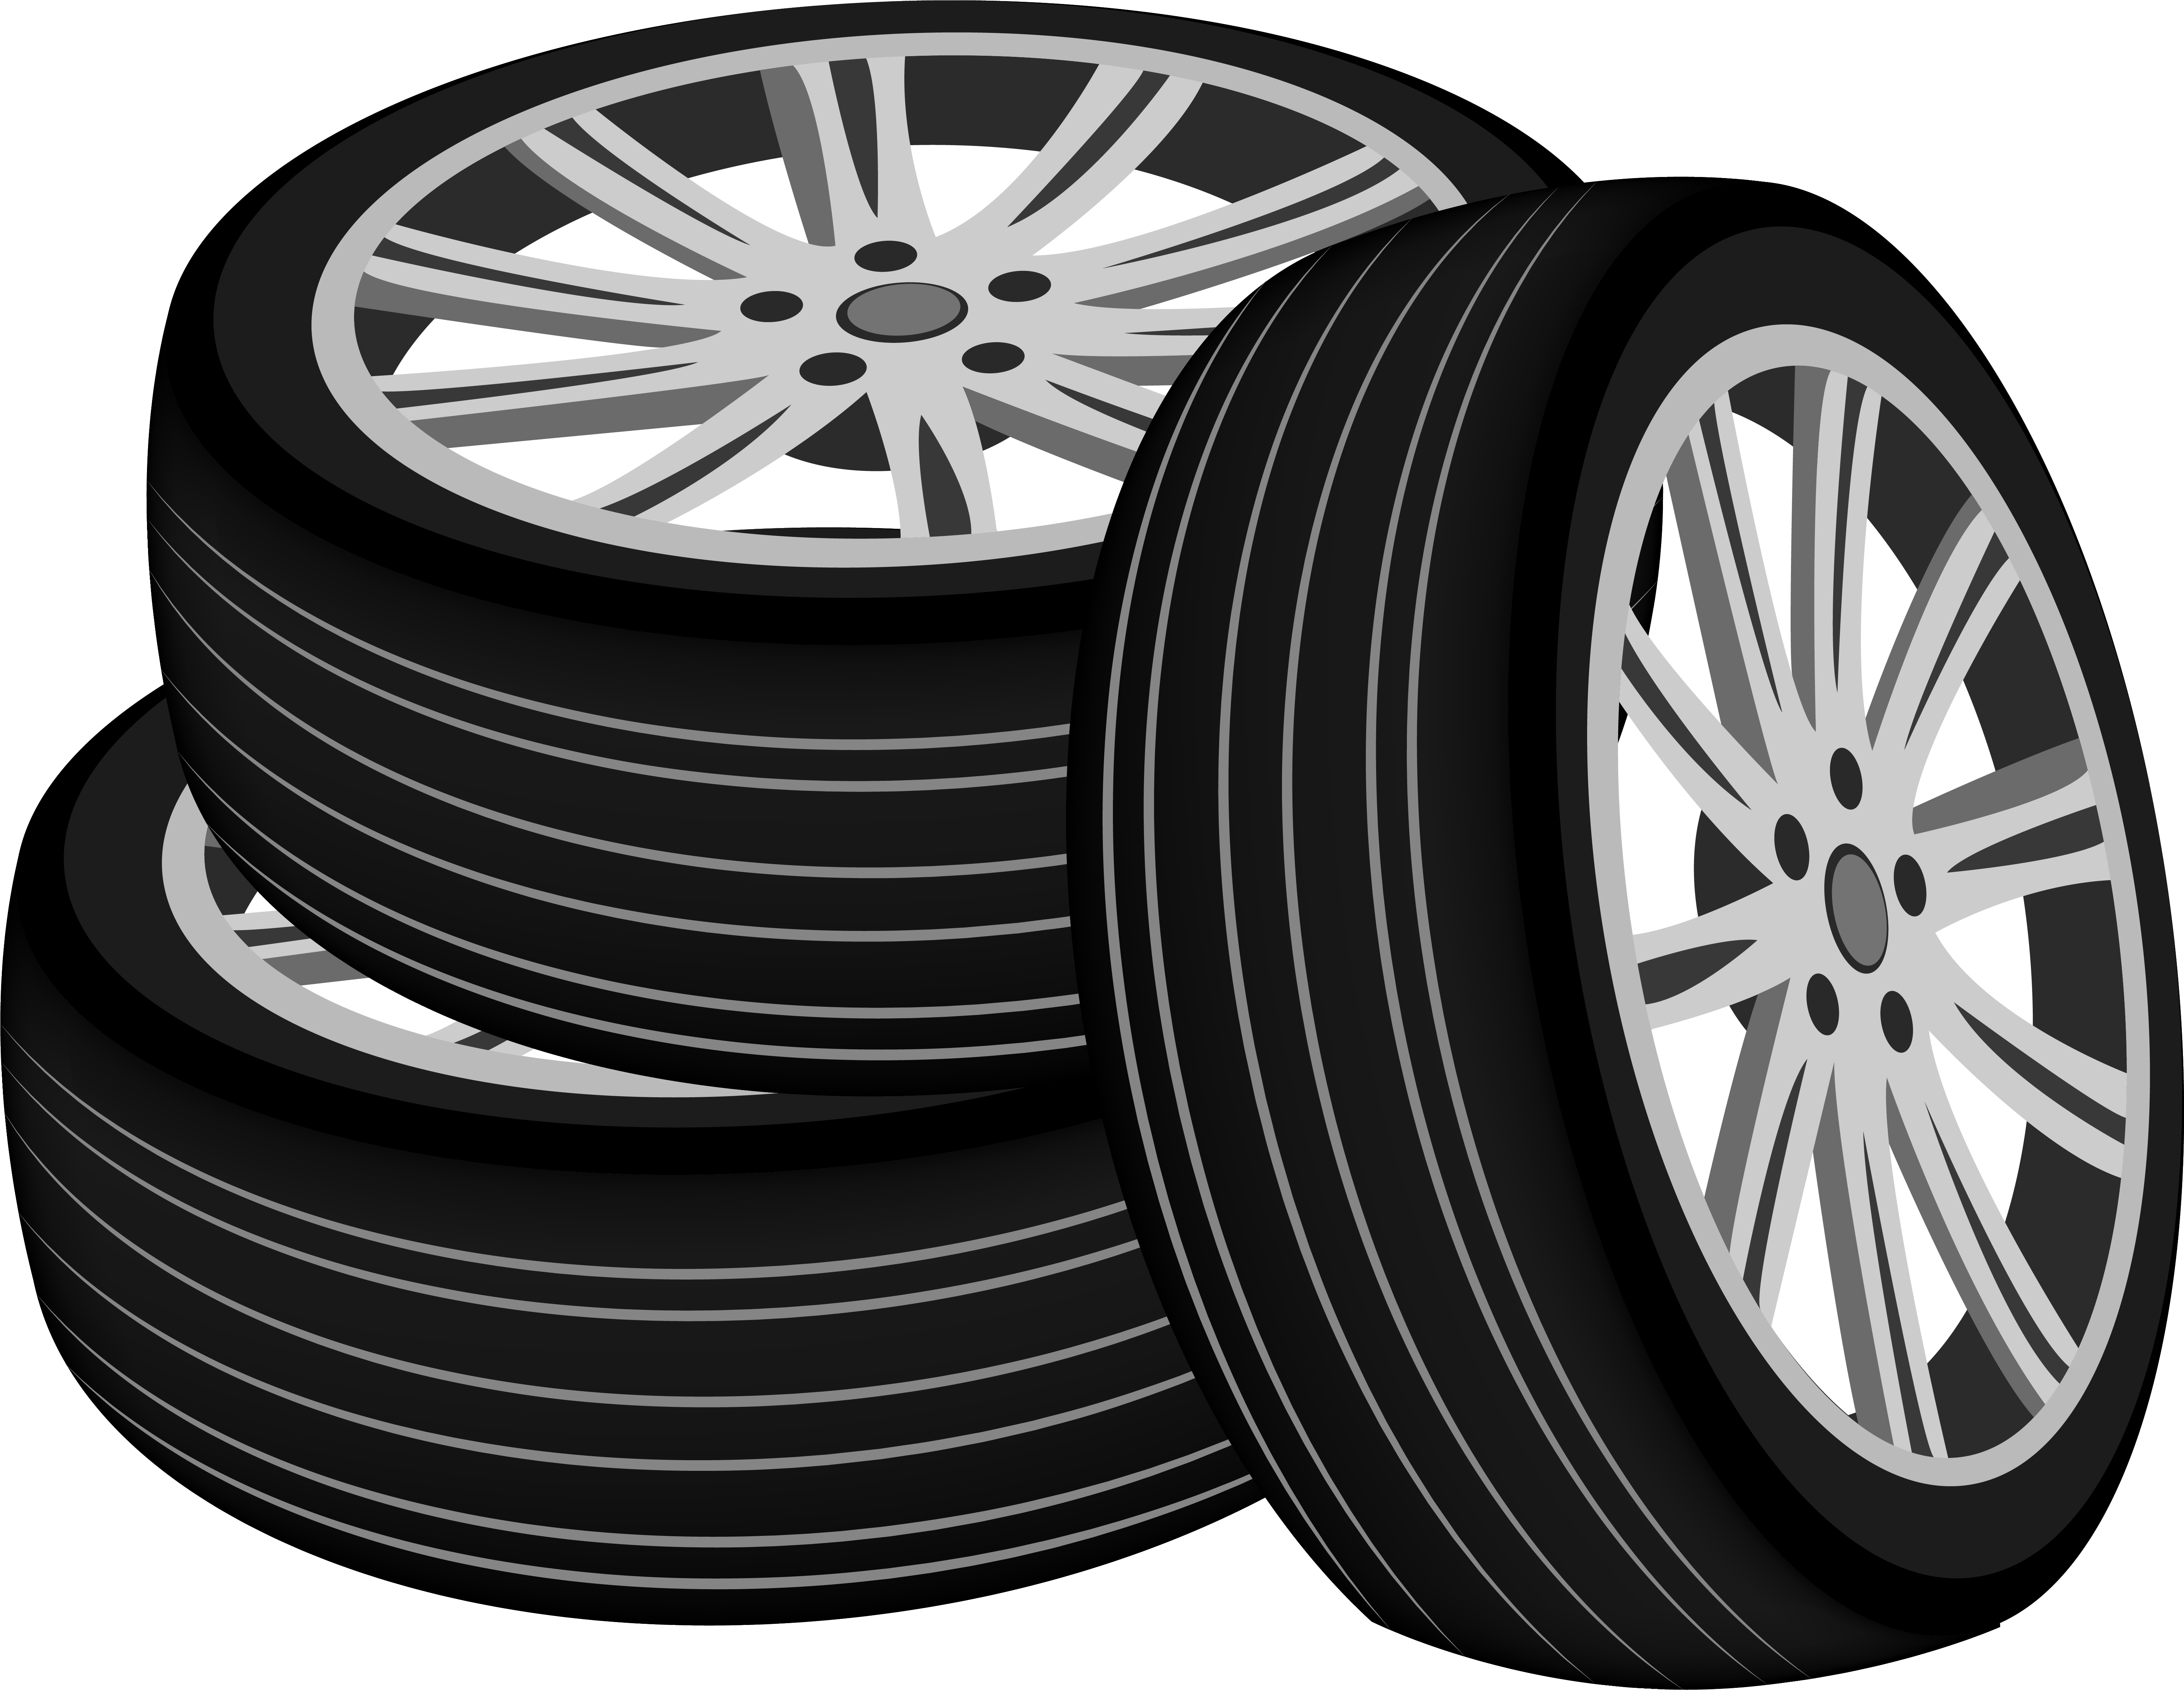 Flat Tire Cartoon Image